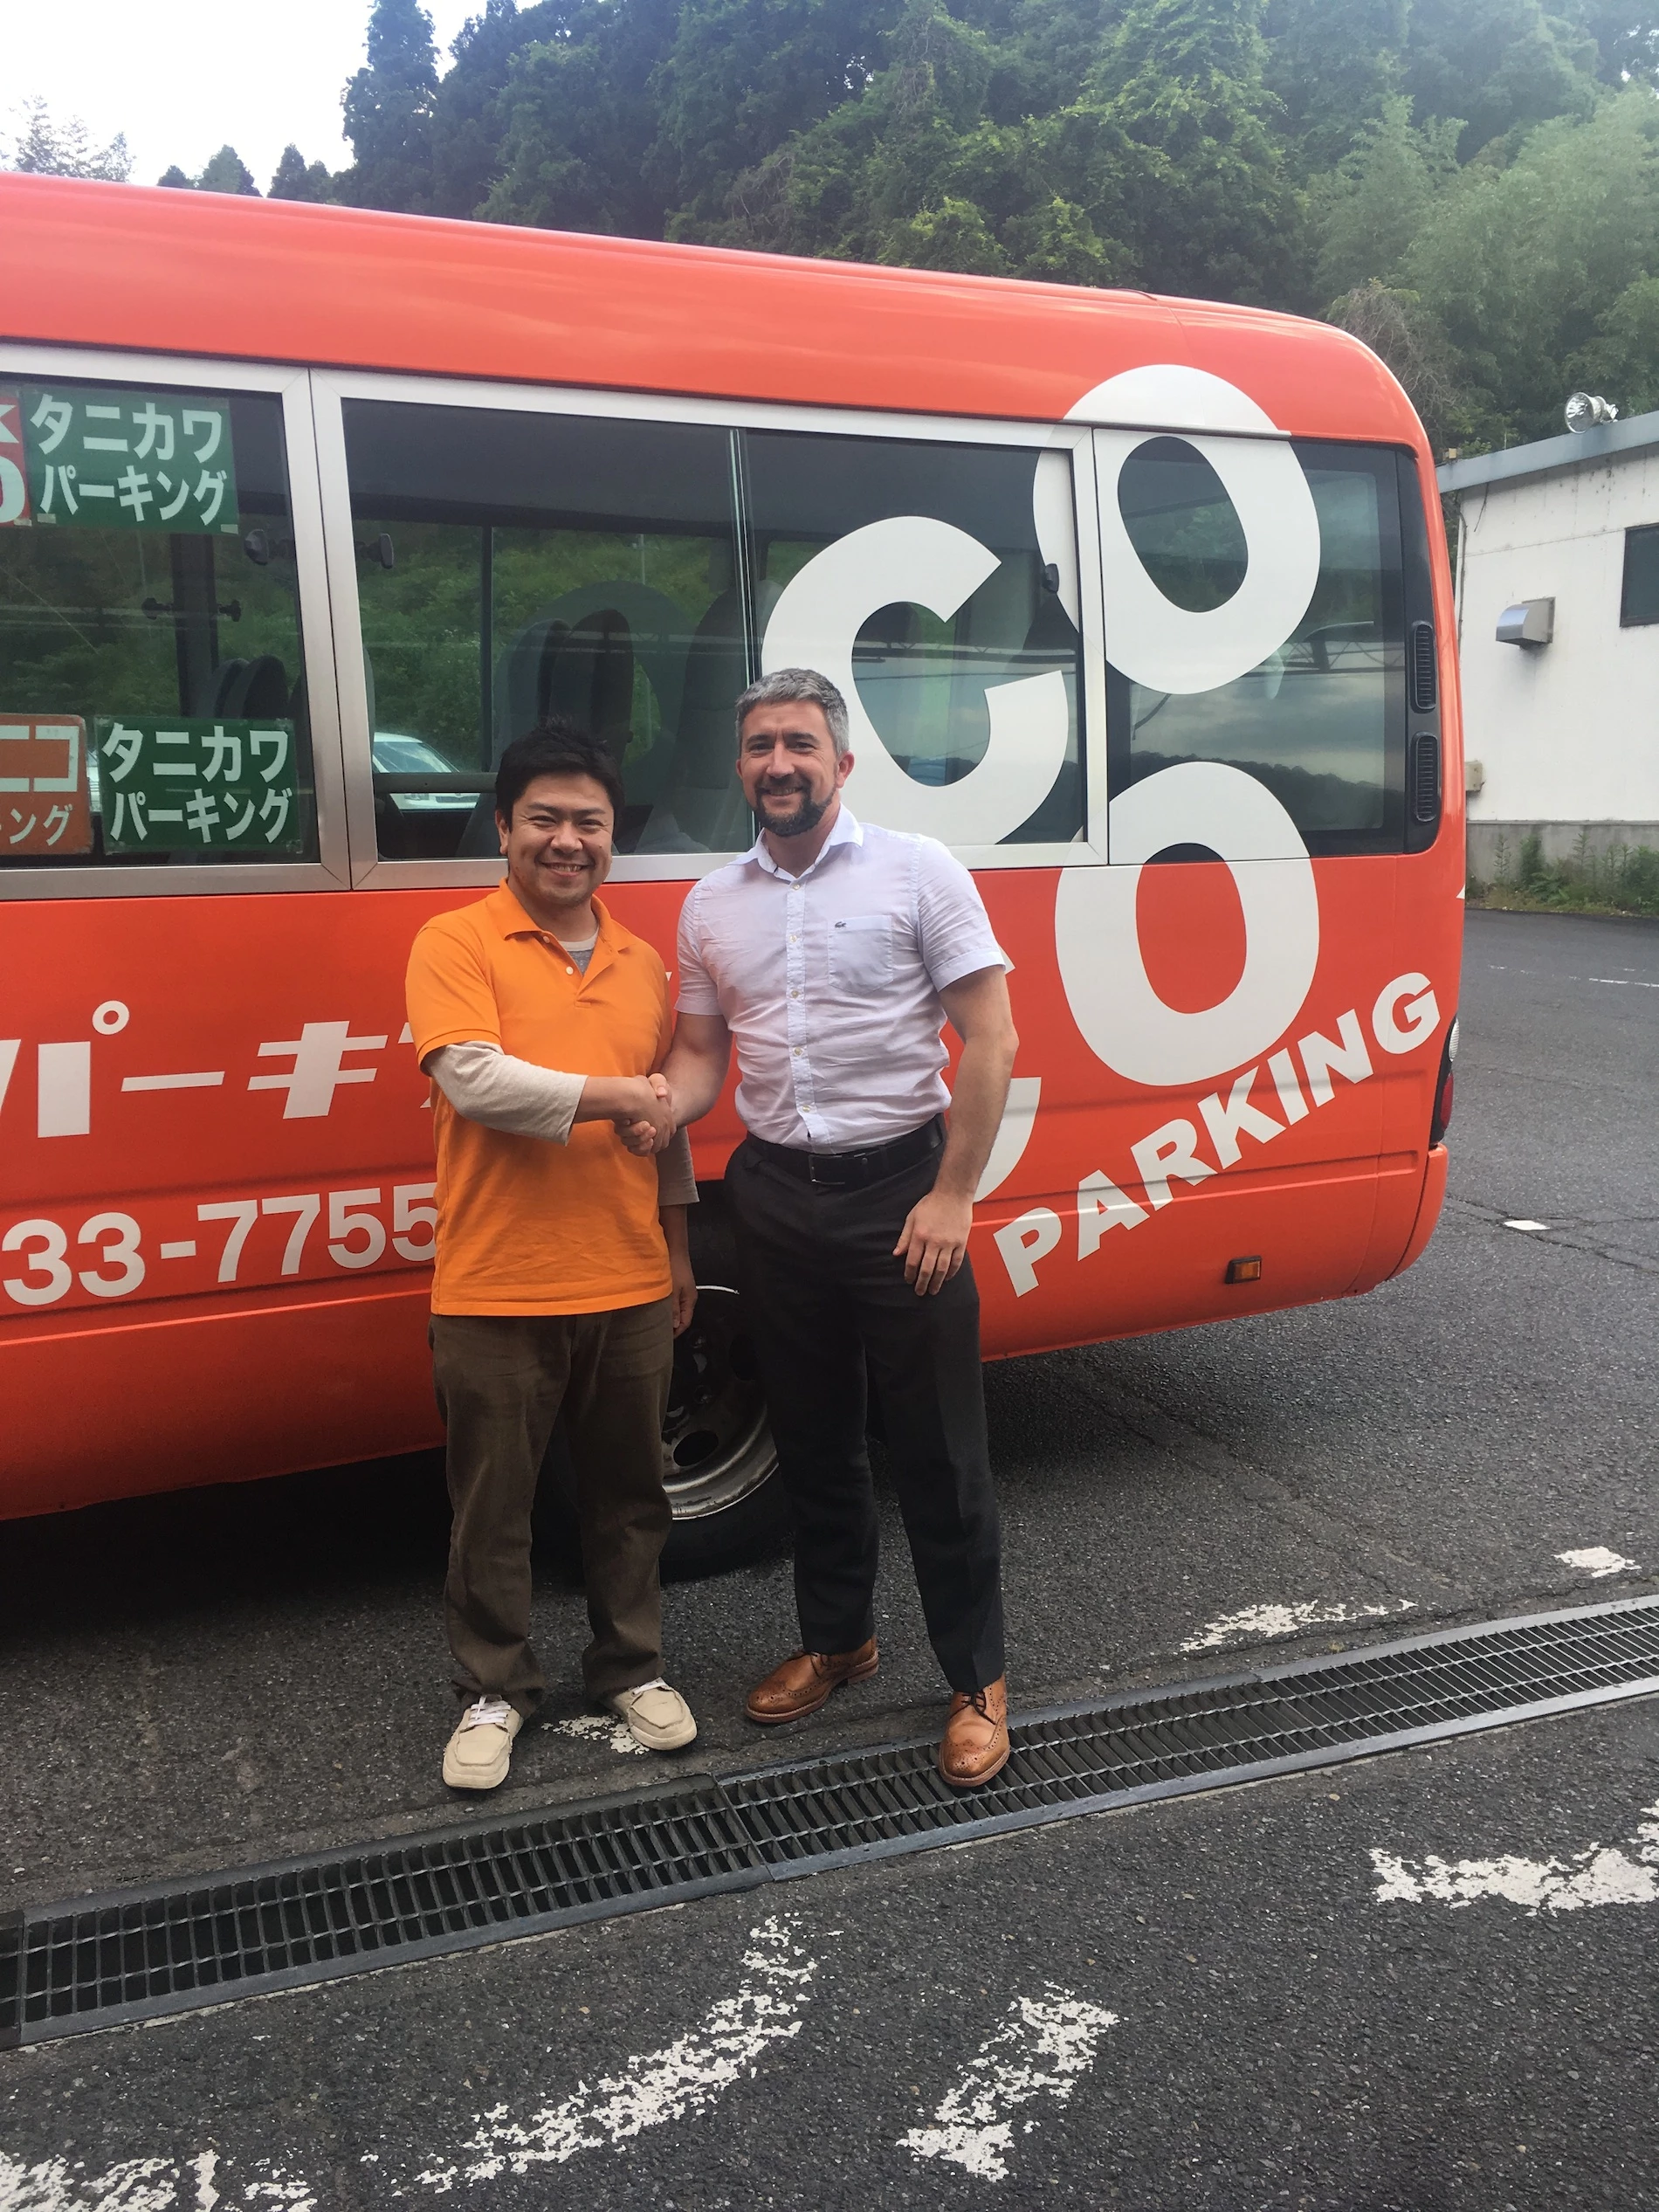 Martin Mansell, Managing Director of Looking4Parking, with Kazuhide Furuhashi, Owner of Coco Parking Narita.